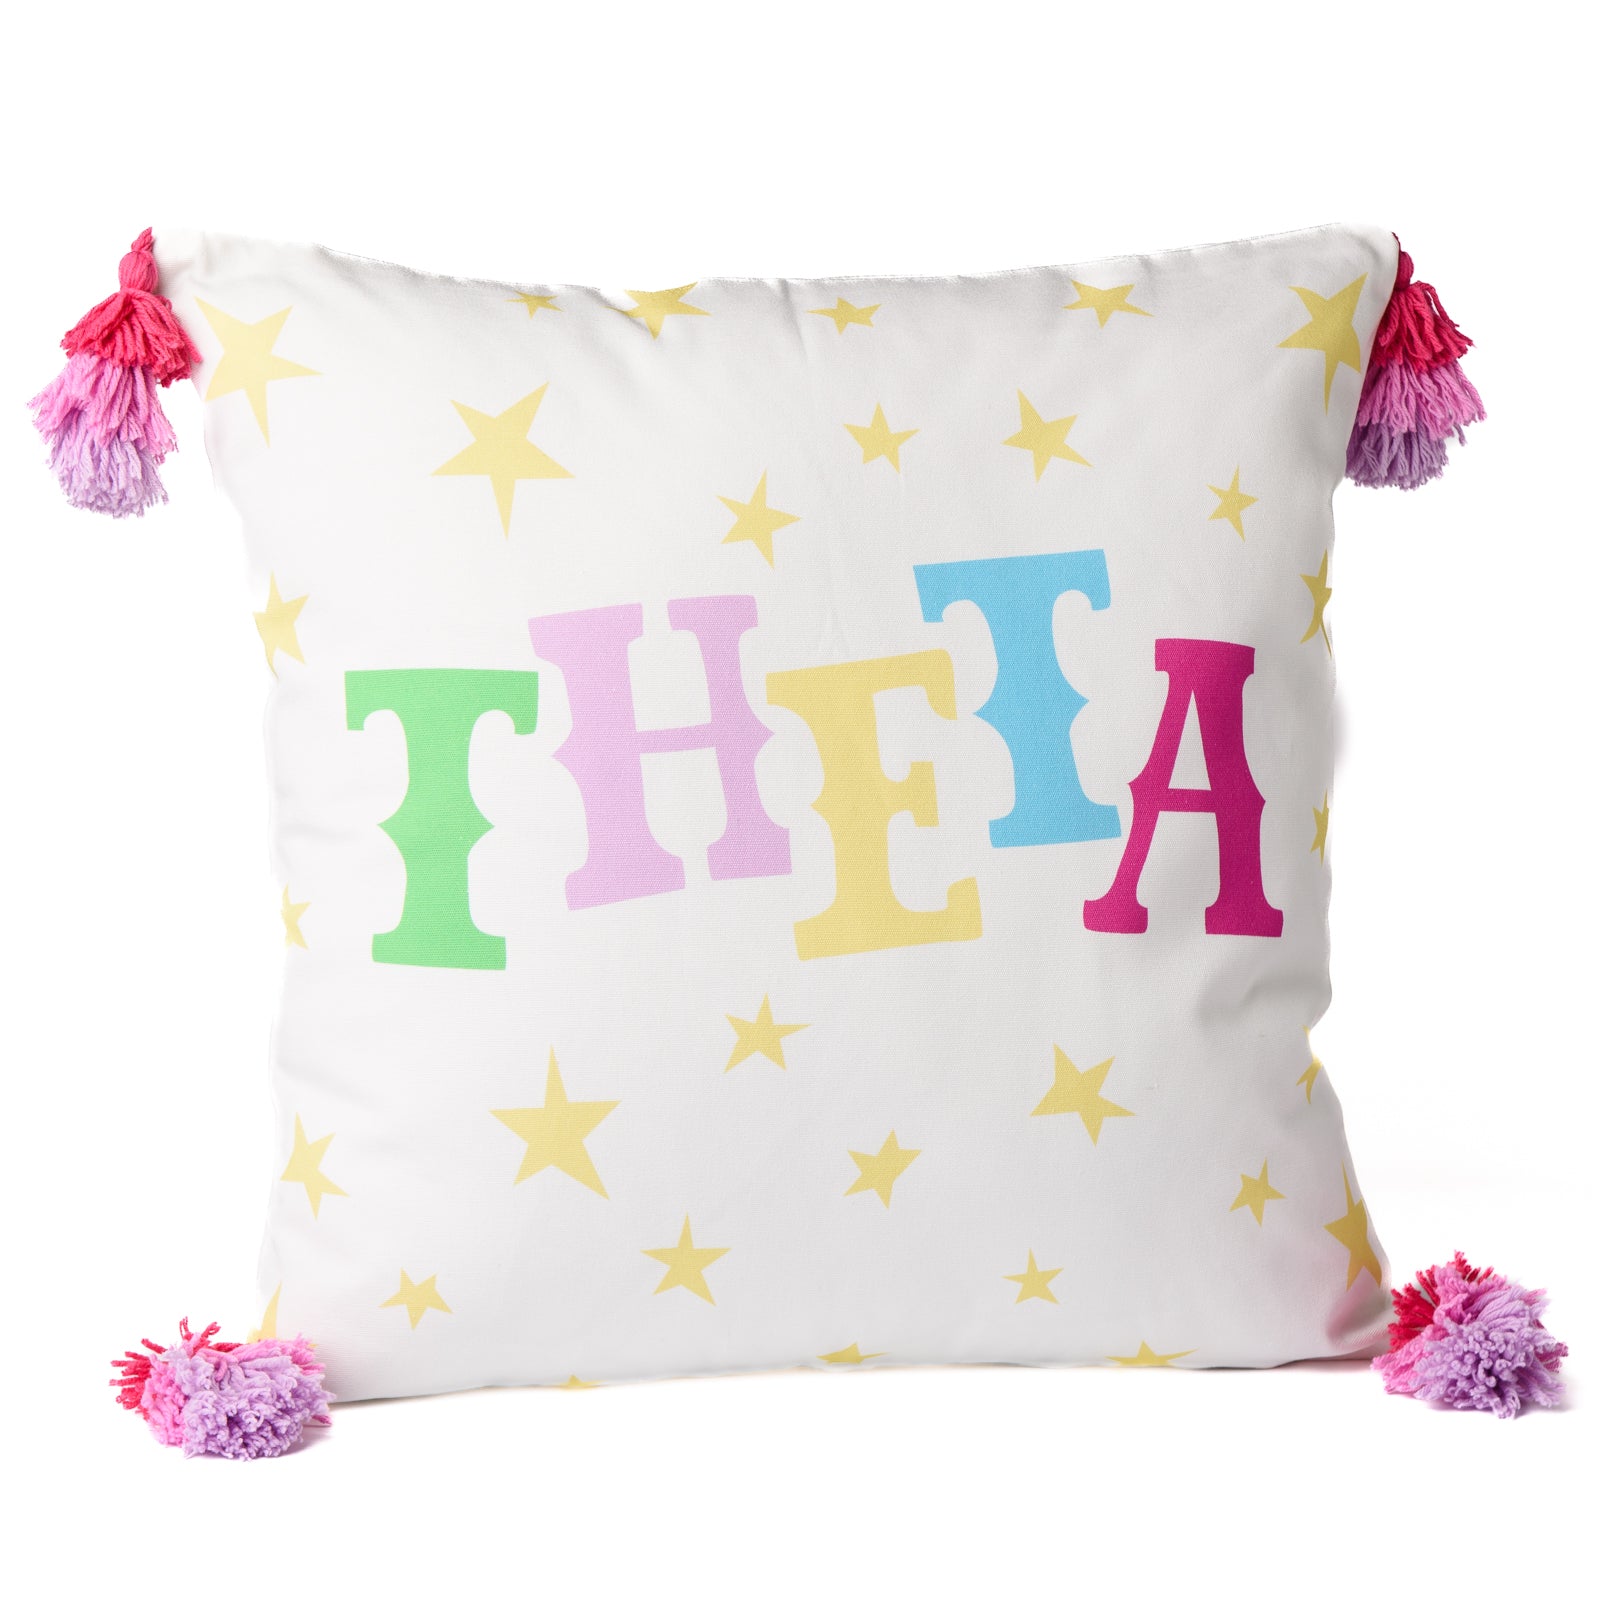 THETA "Oh My Stars" Printed Pillow